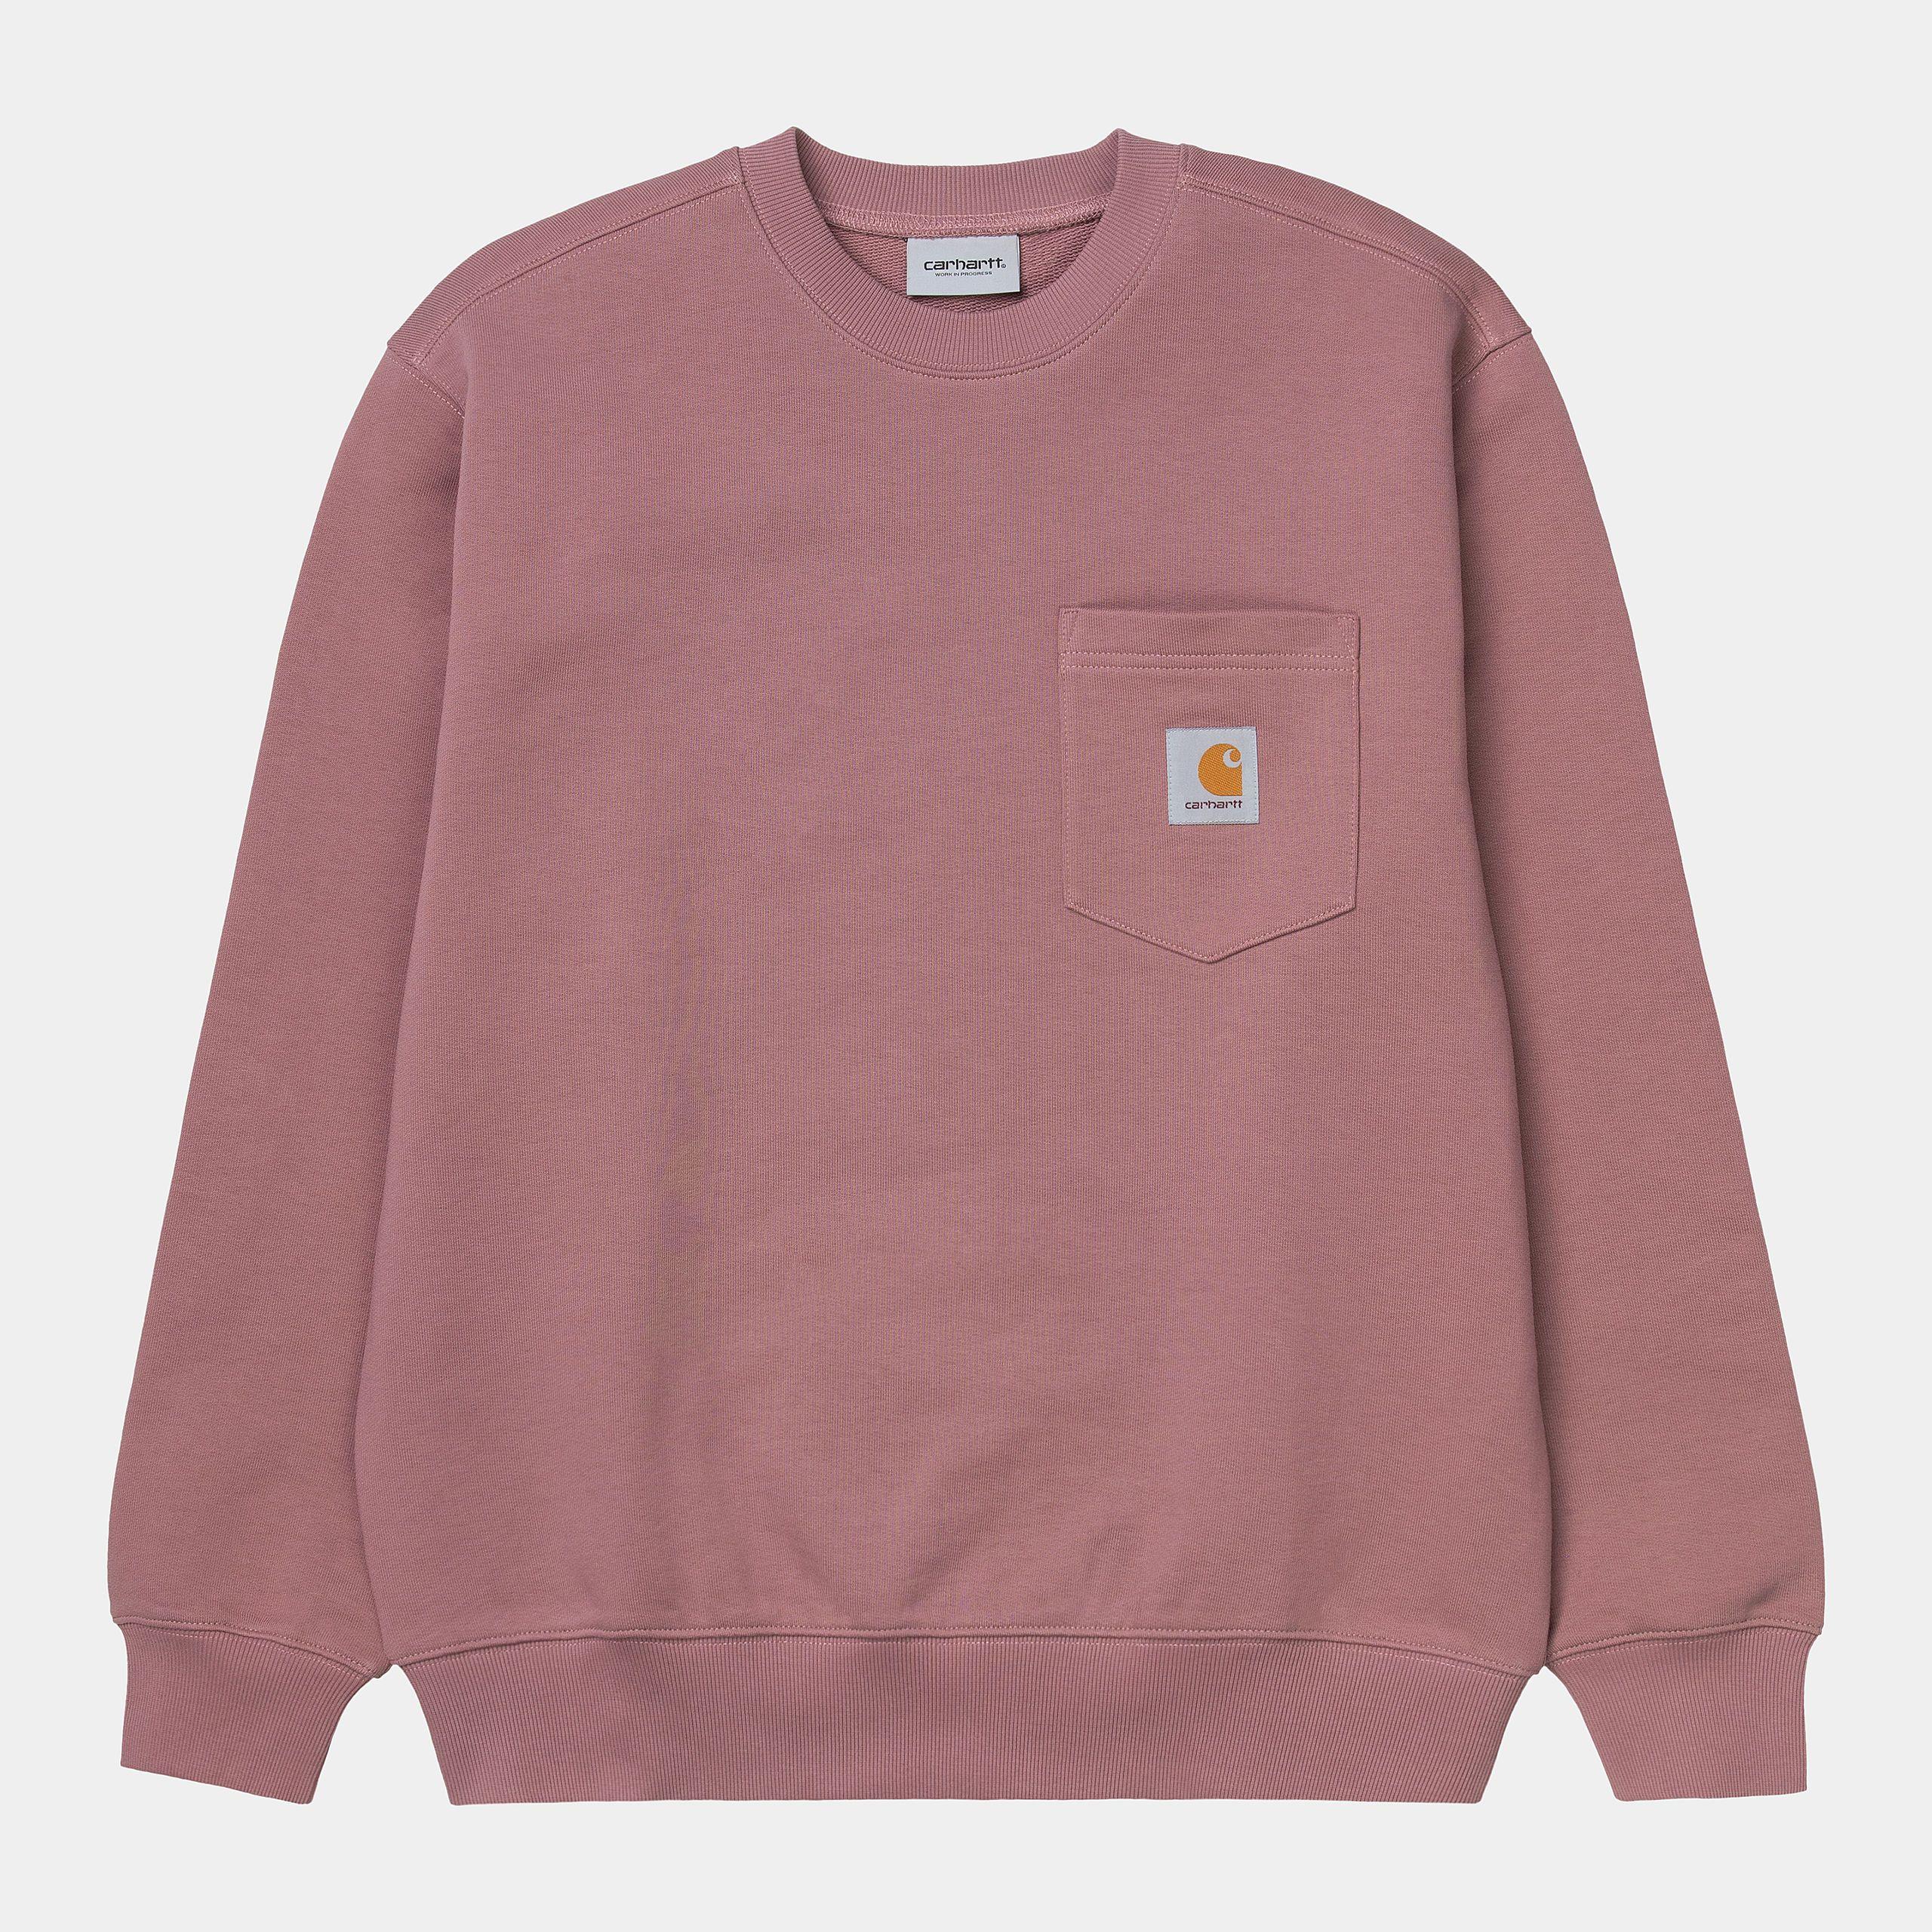 Carhartt Wip Pocket Sweatshirt - Malaga in Pink for Men | Lyst